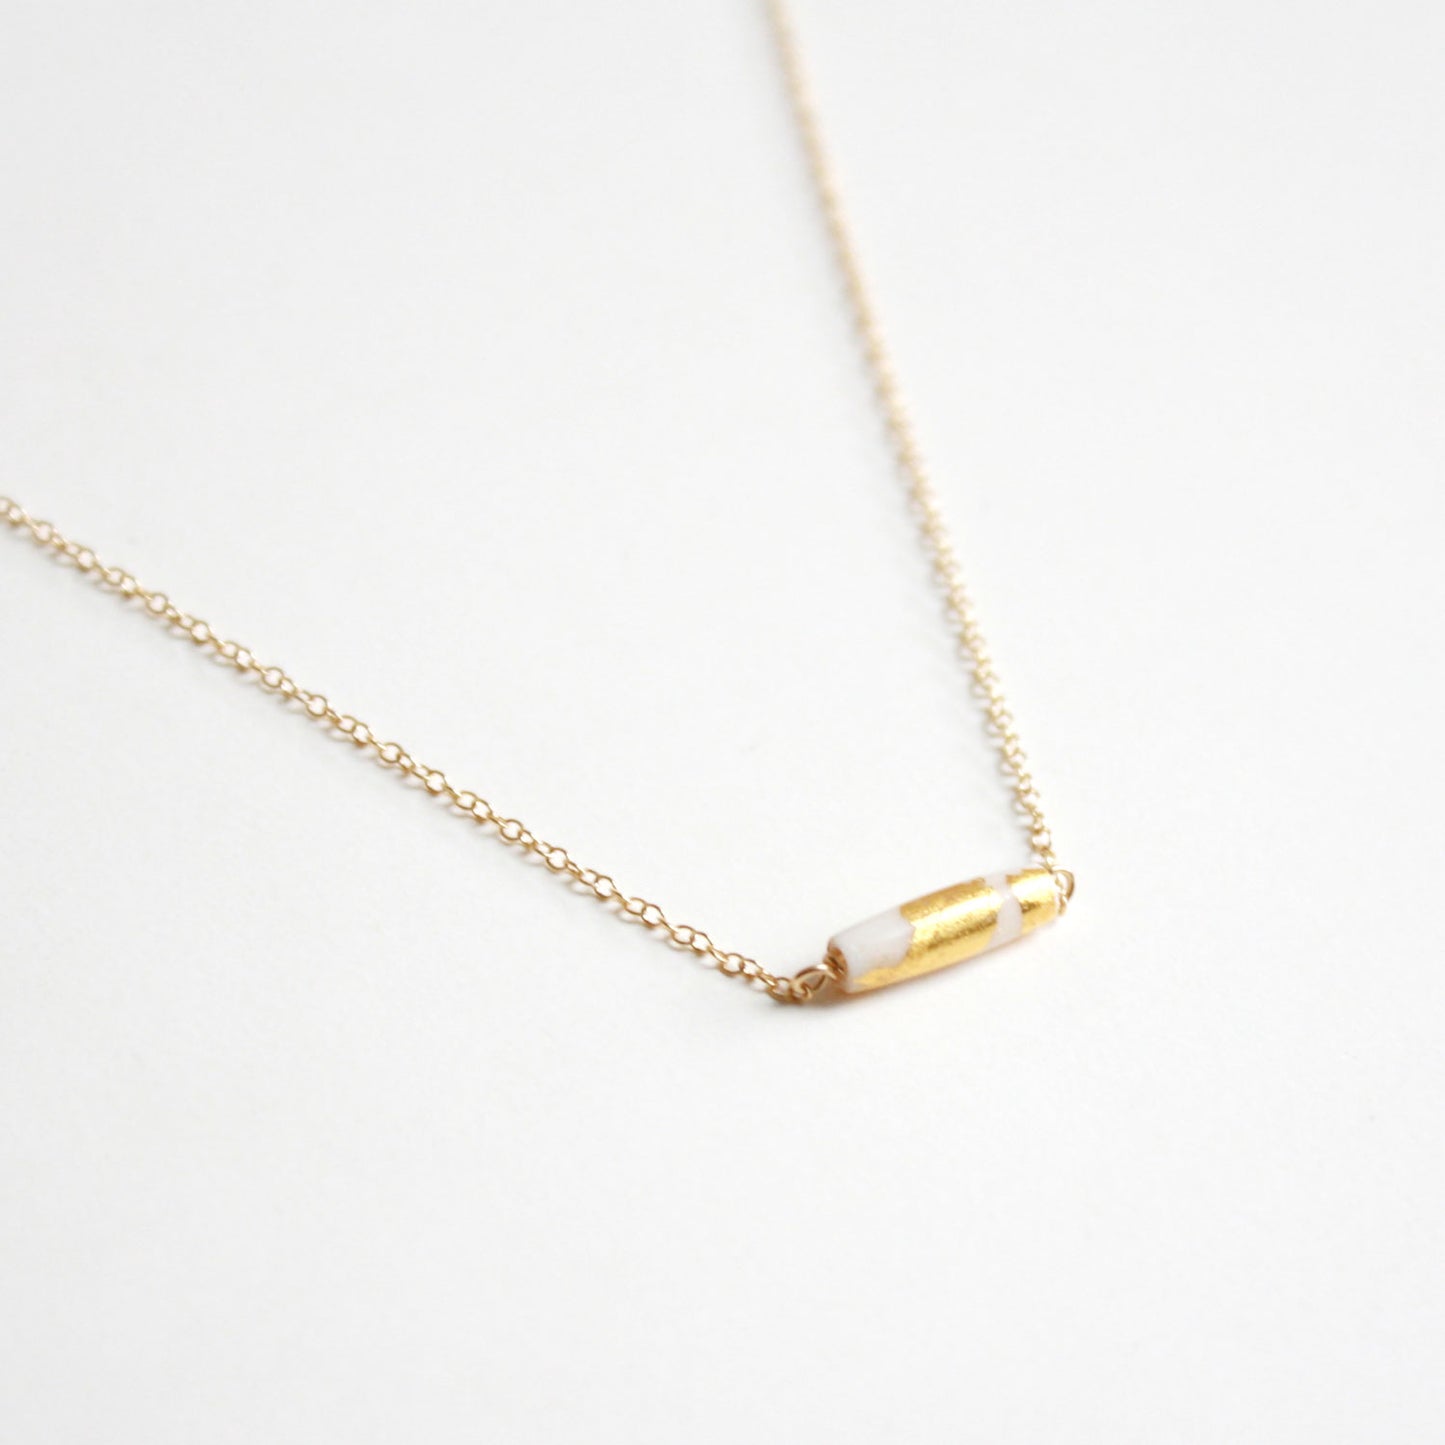 Gold Leaf Necklace - White Tube - Short